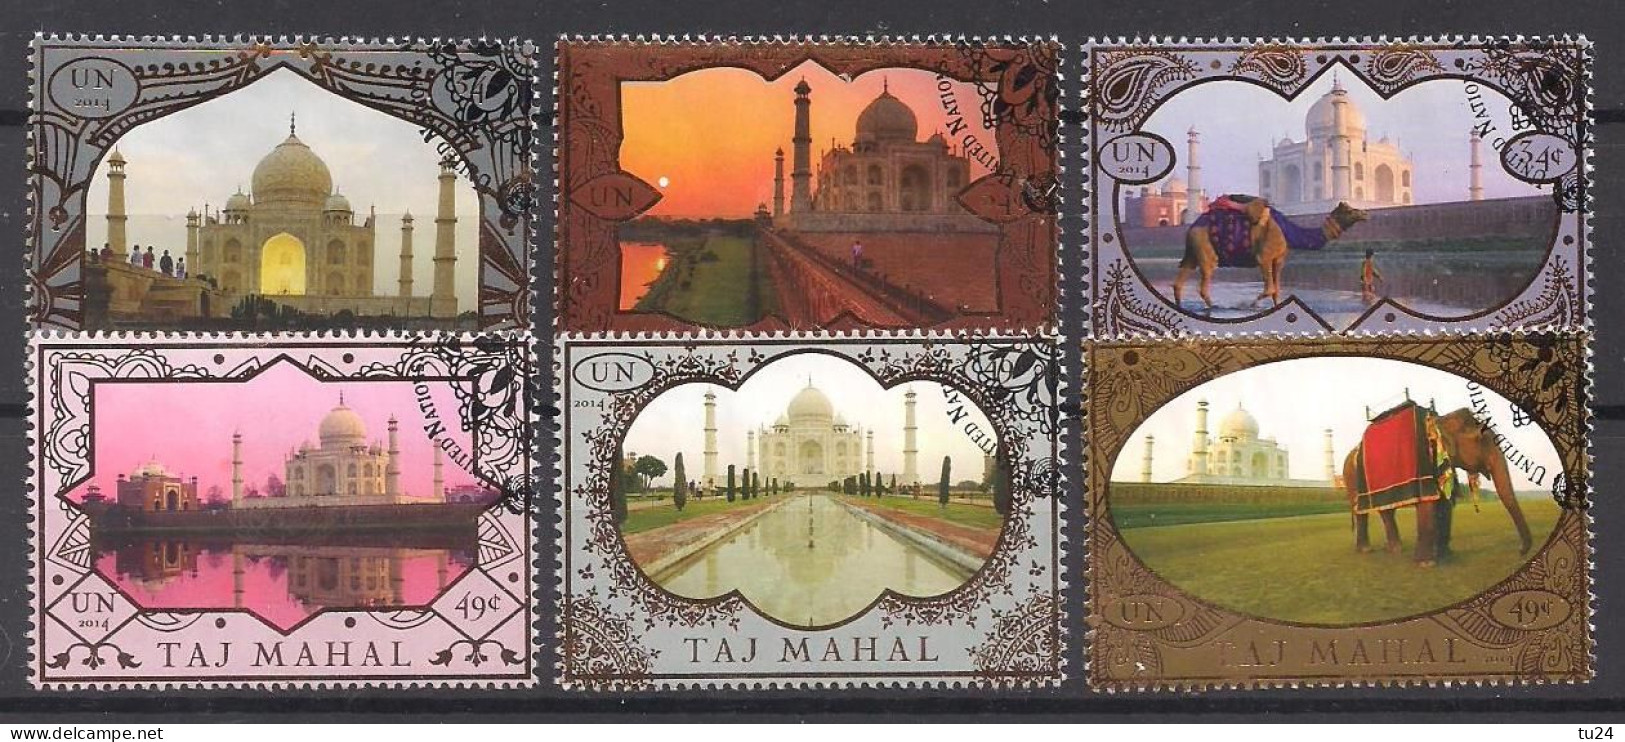 UNO  New York  (2014)  Mi.Nr.  1420 - 1425  Gest. / Used  (9hf06) Taj Mahal - Usati